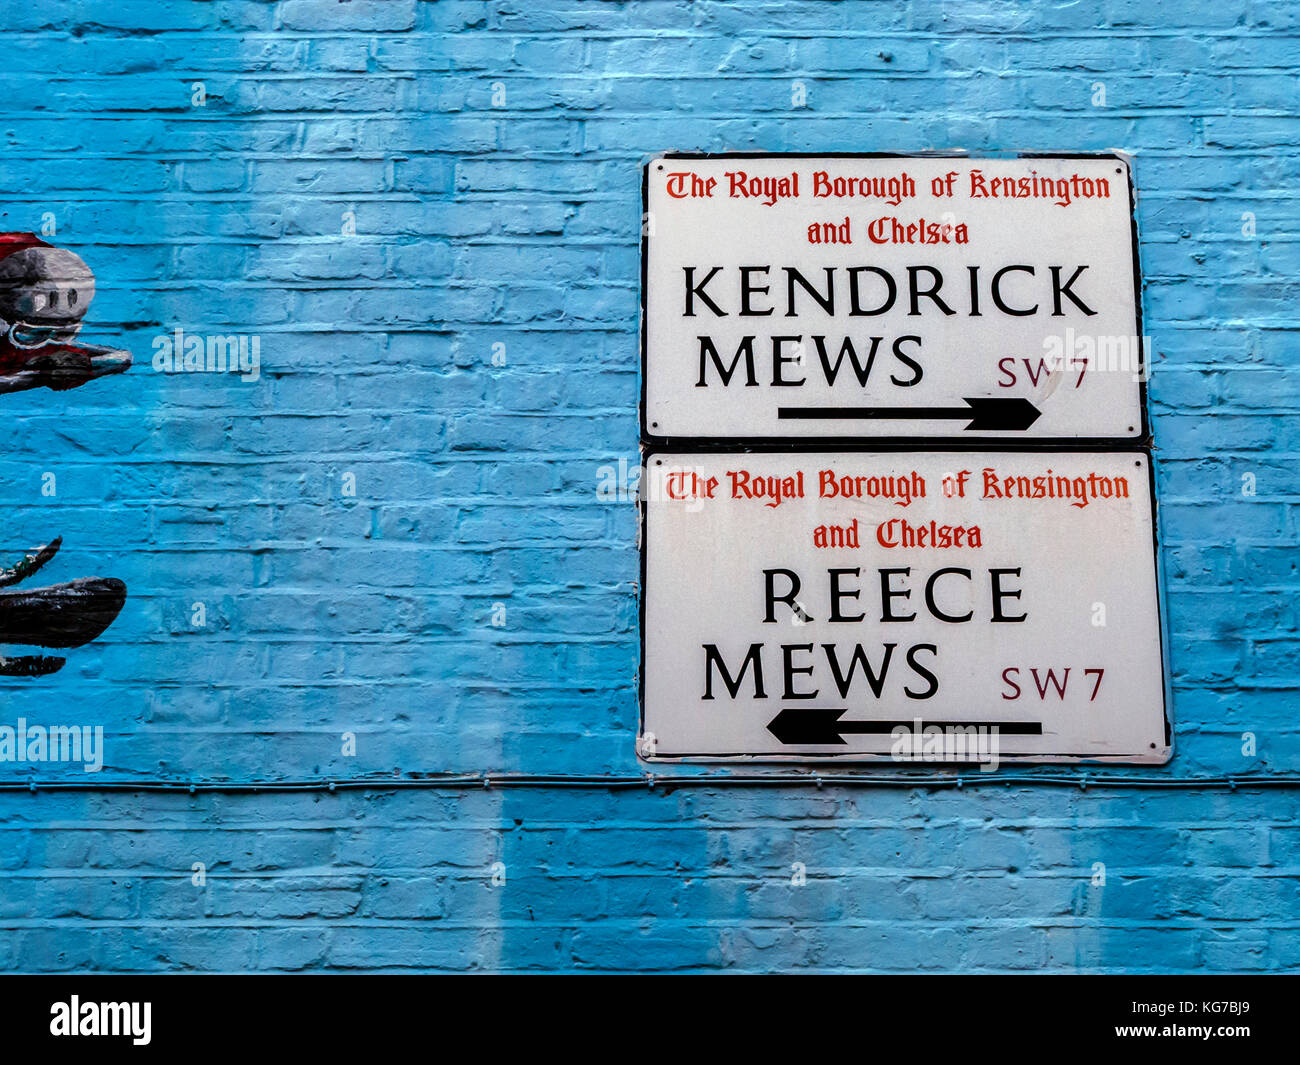 Kendrick mews e reece mews cartelli stradali, Londra sw7 Foto Stock